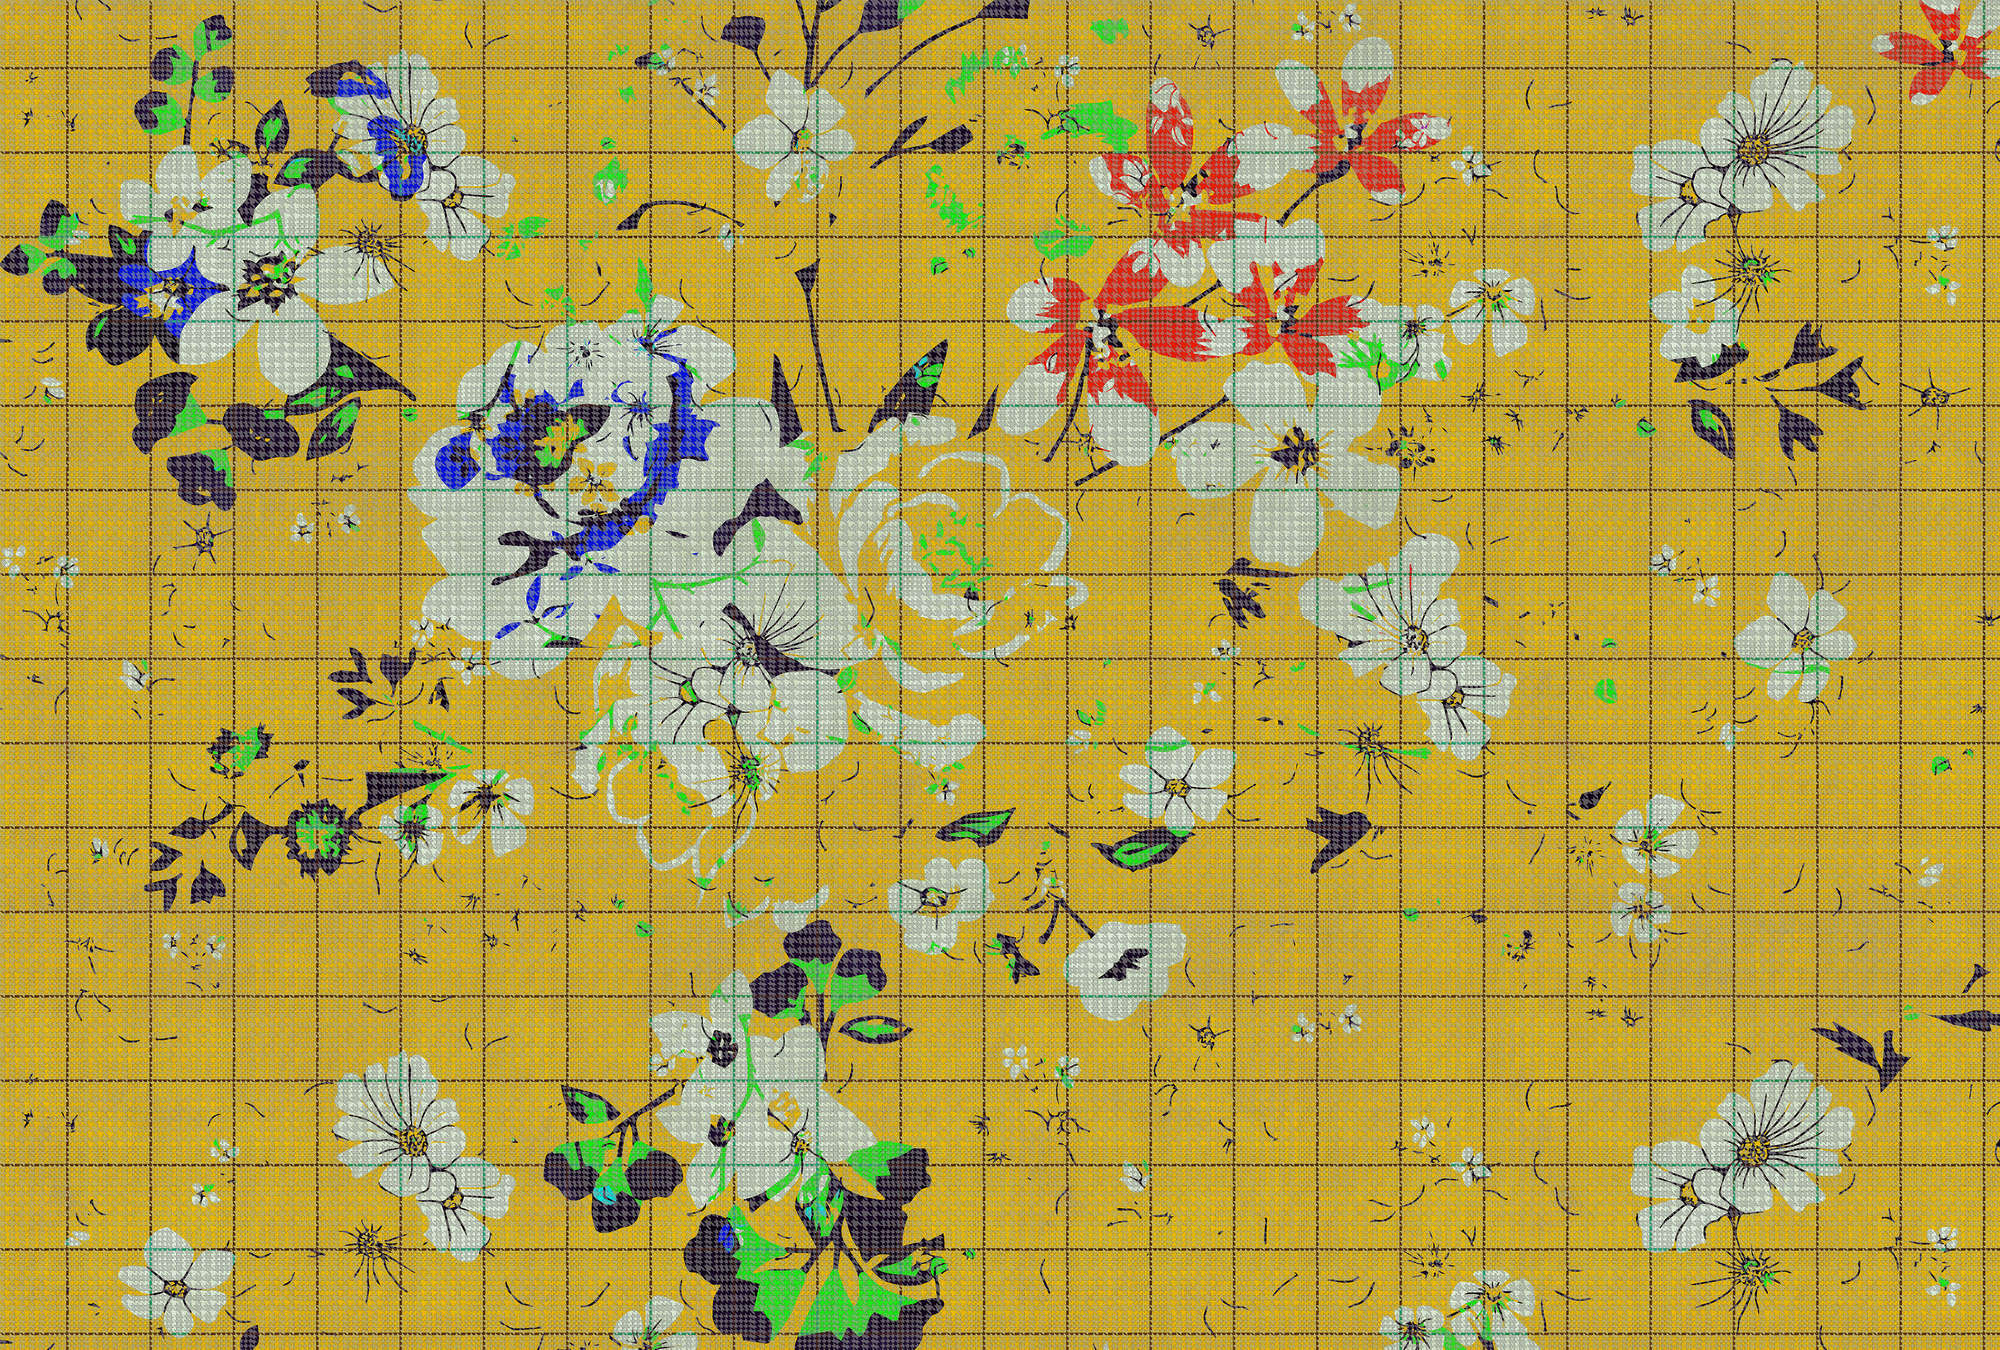             Flower plaid 1 - Fototapete buntes Blumenmosaik Gelb mit karierter Optik – Blau, Gelb | Perlmutt Glattvlies
        